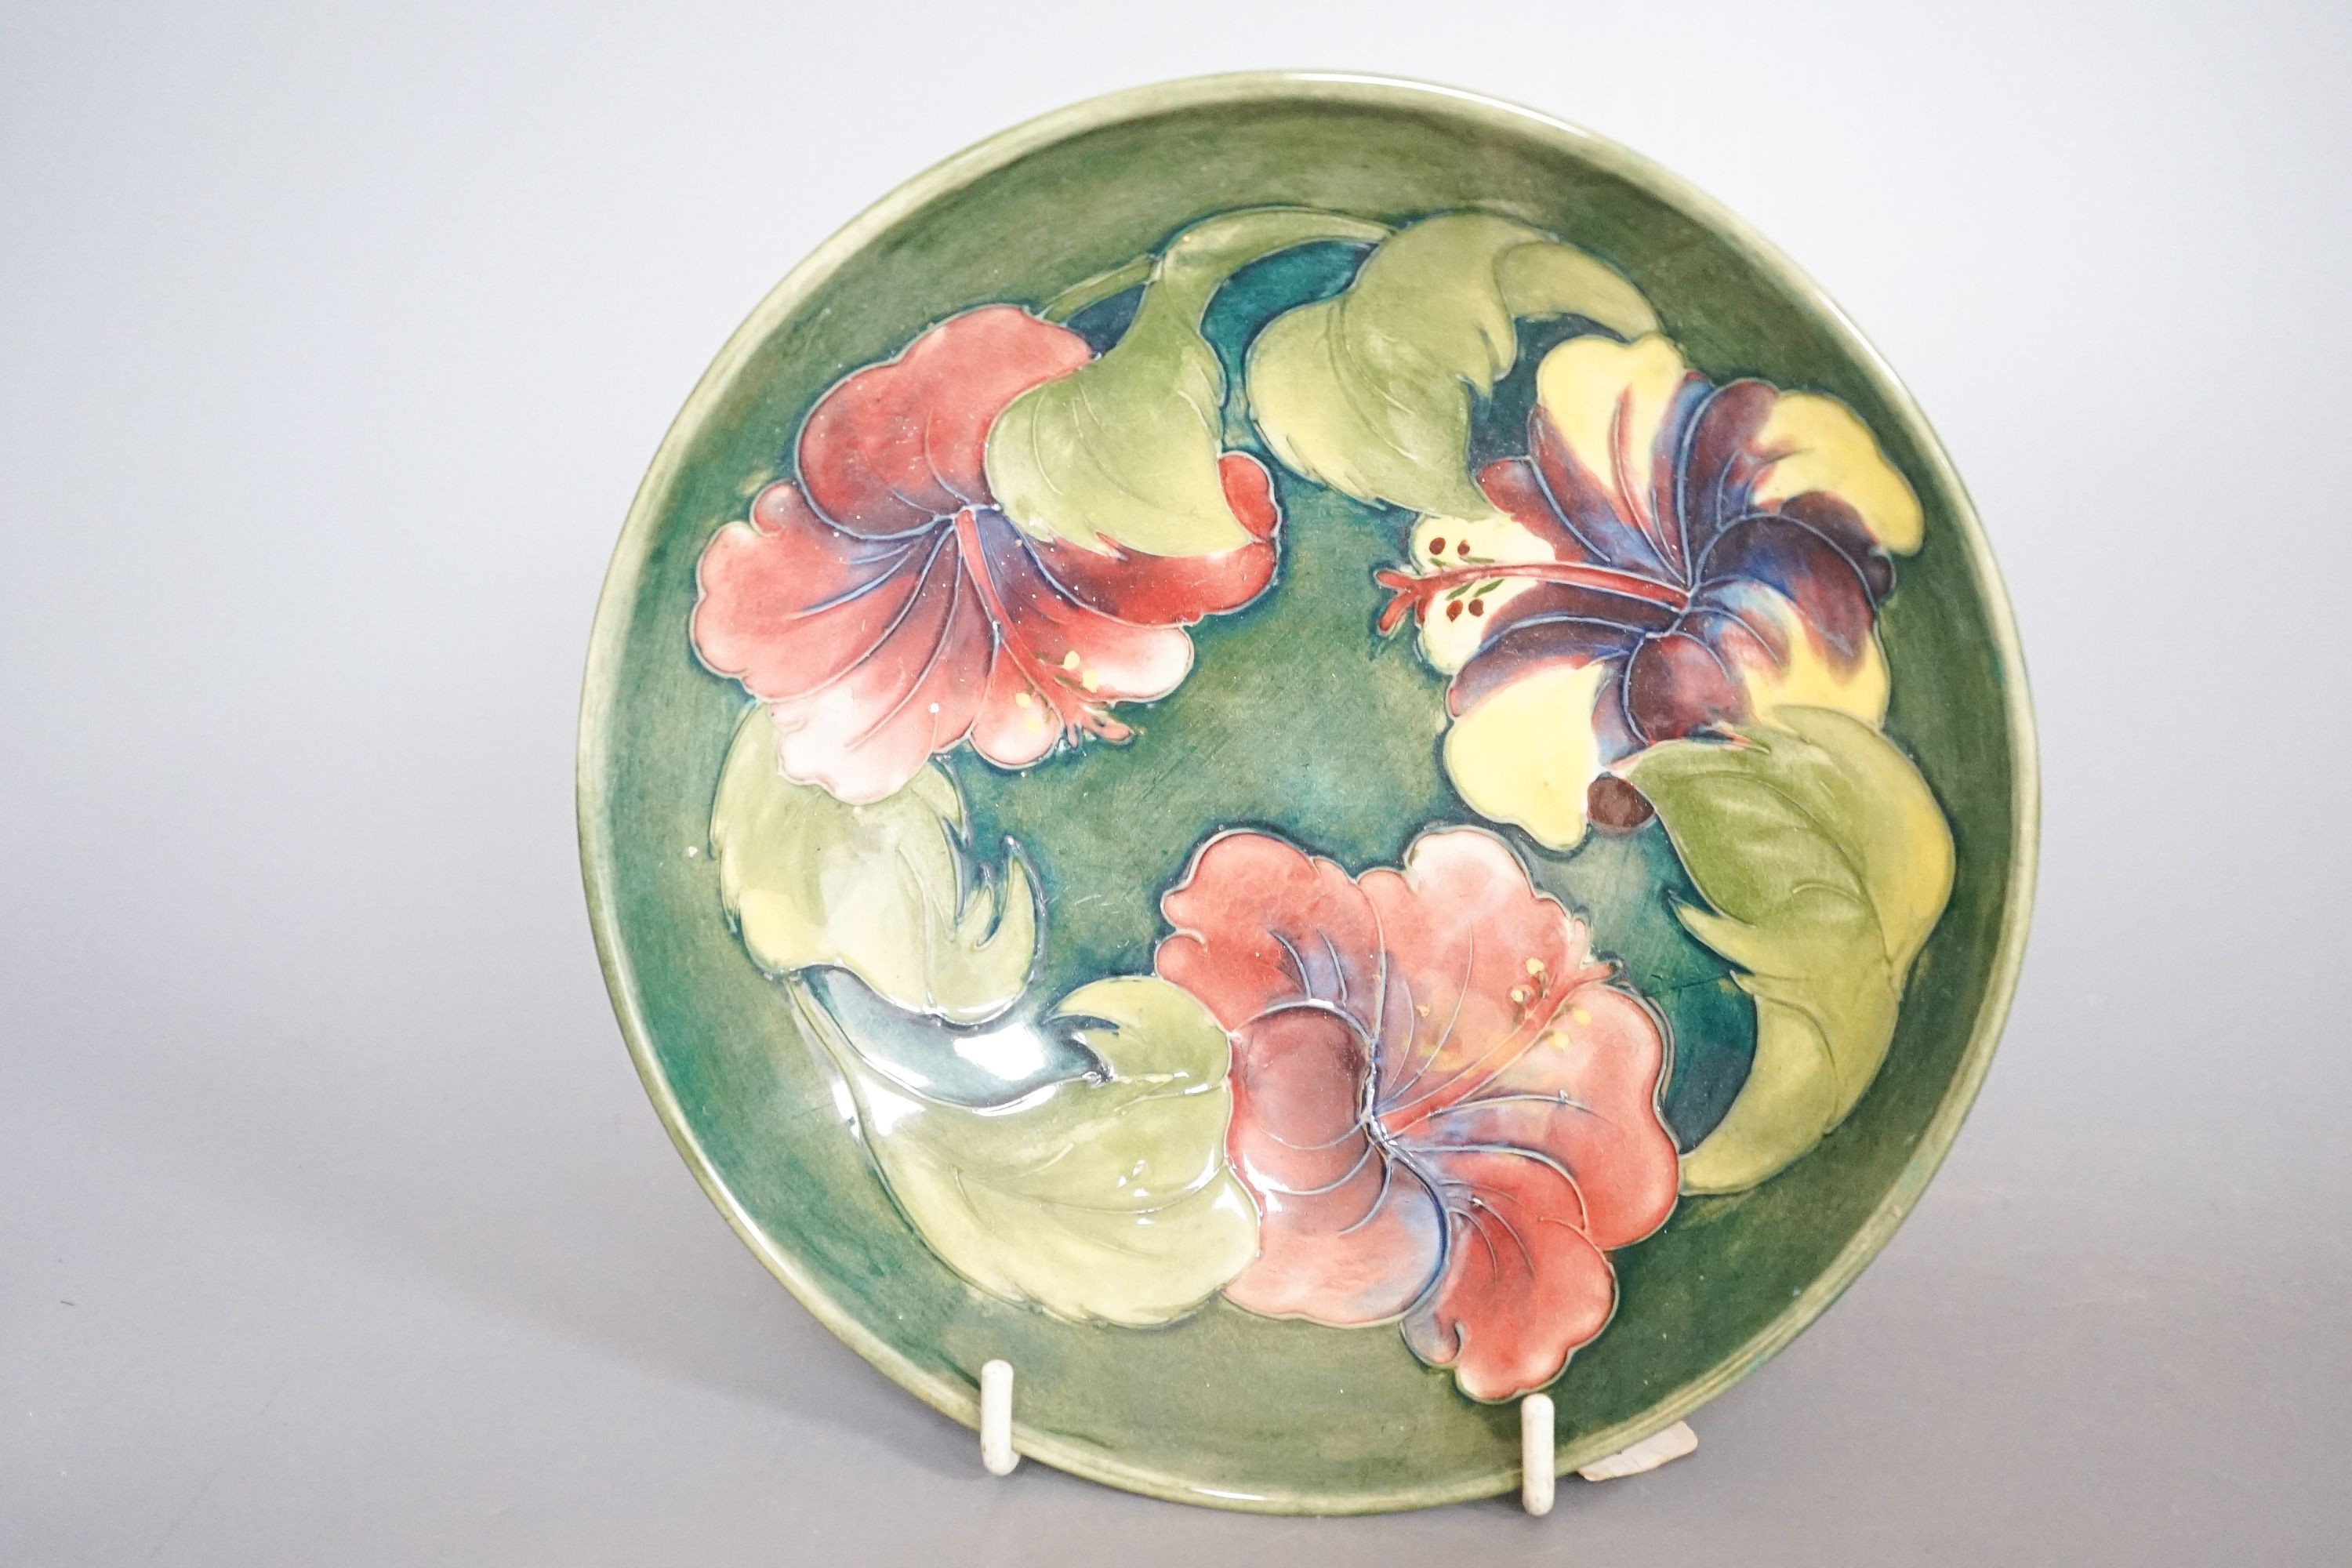 A Moorcroft hibiscus pattern vase, bowl and plant pot 19cm